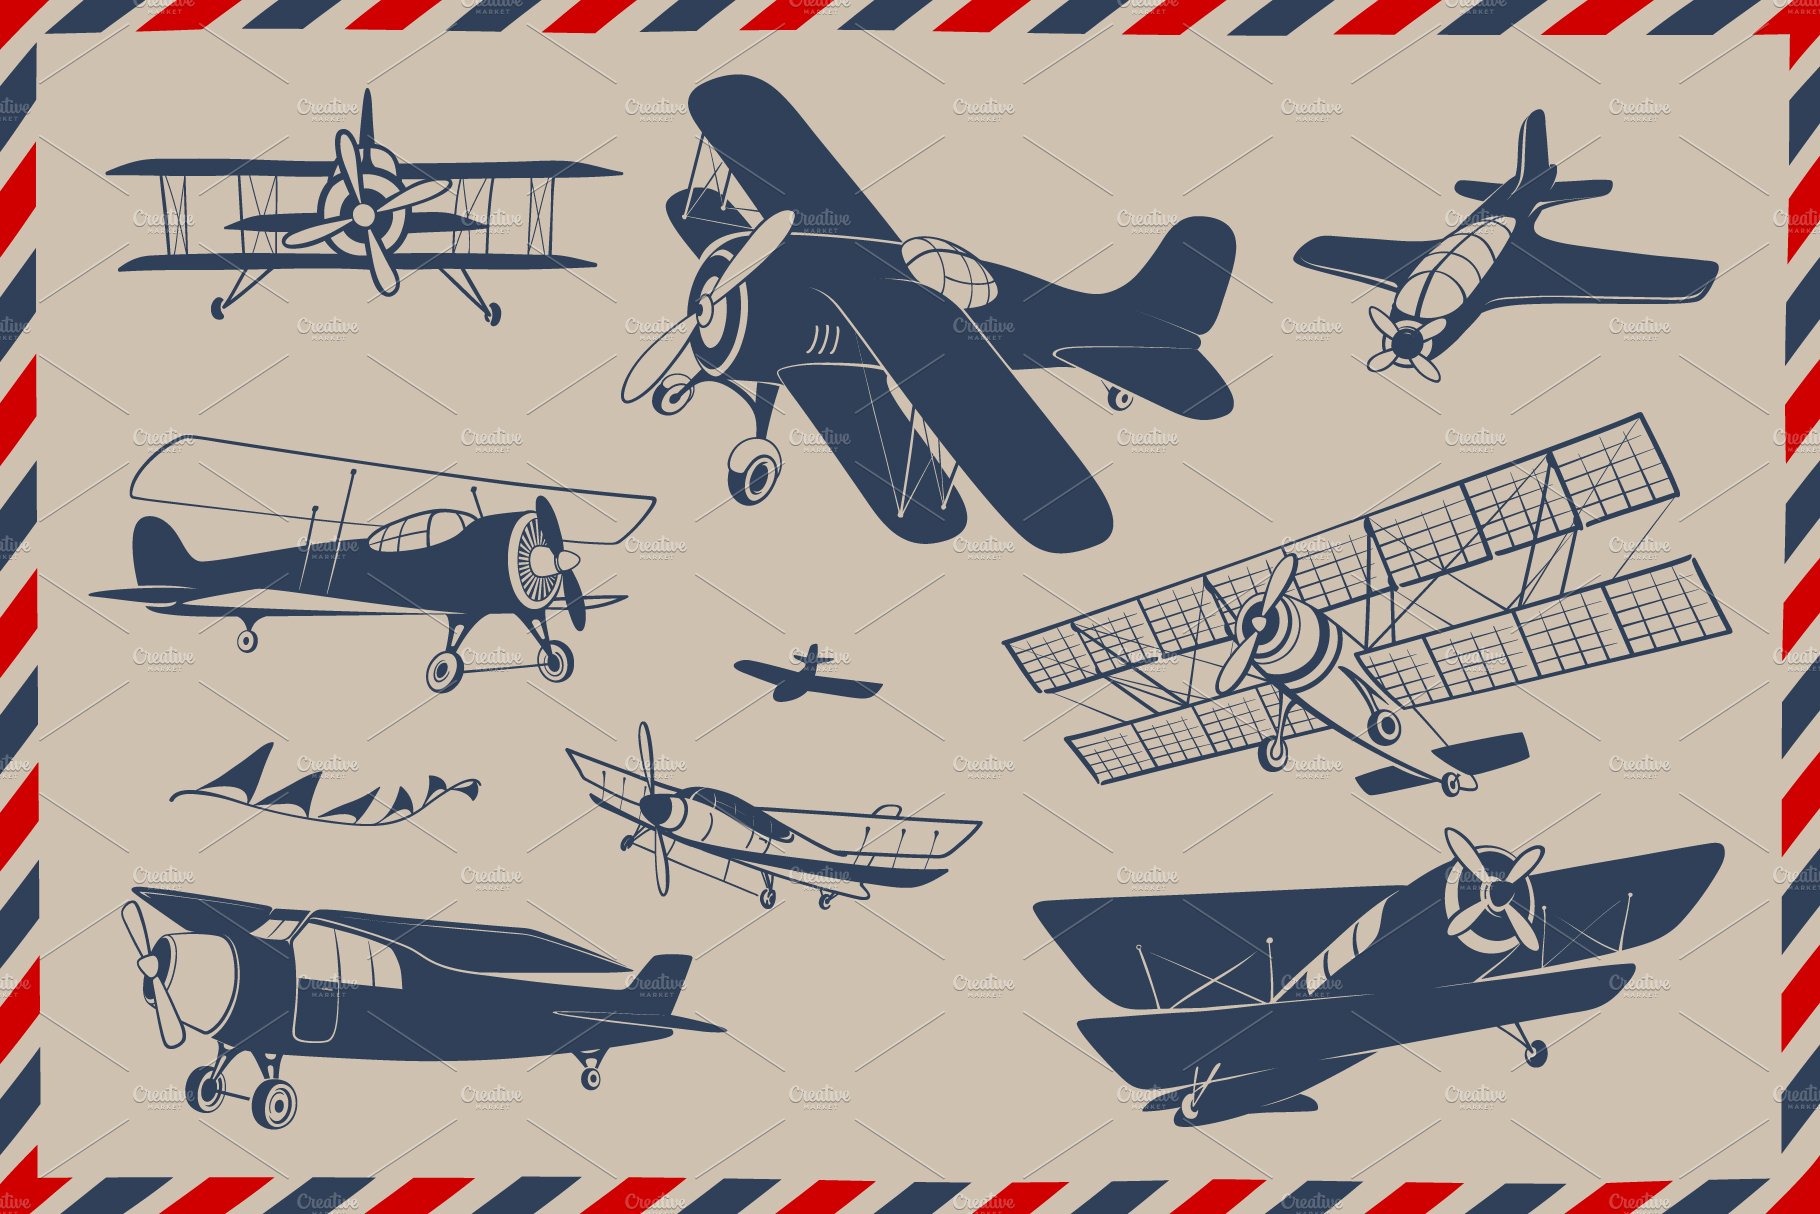 Cool vintage aircrafts illustrations.